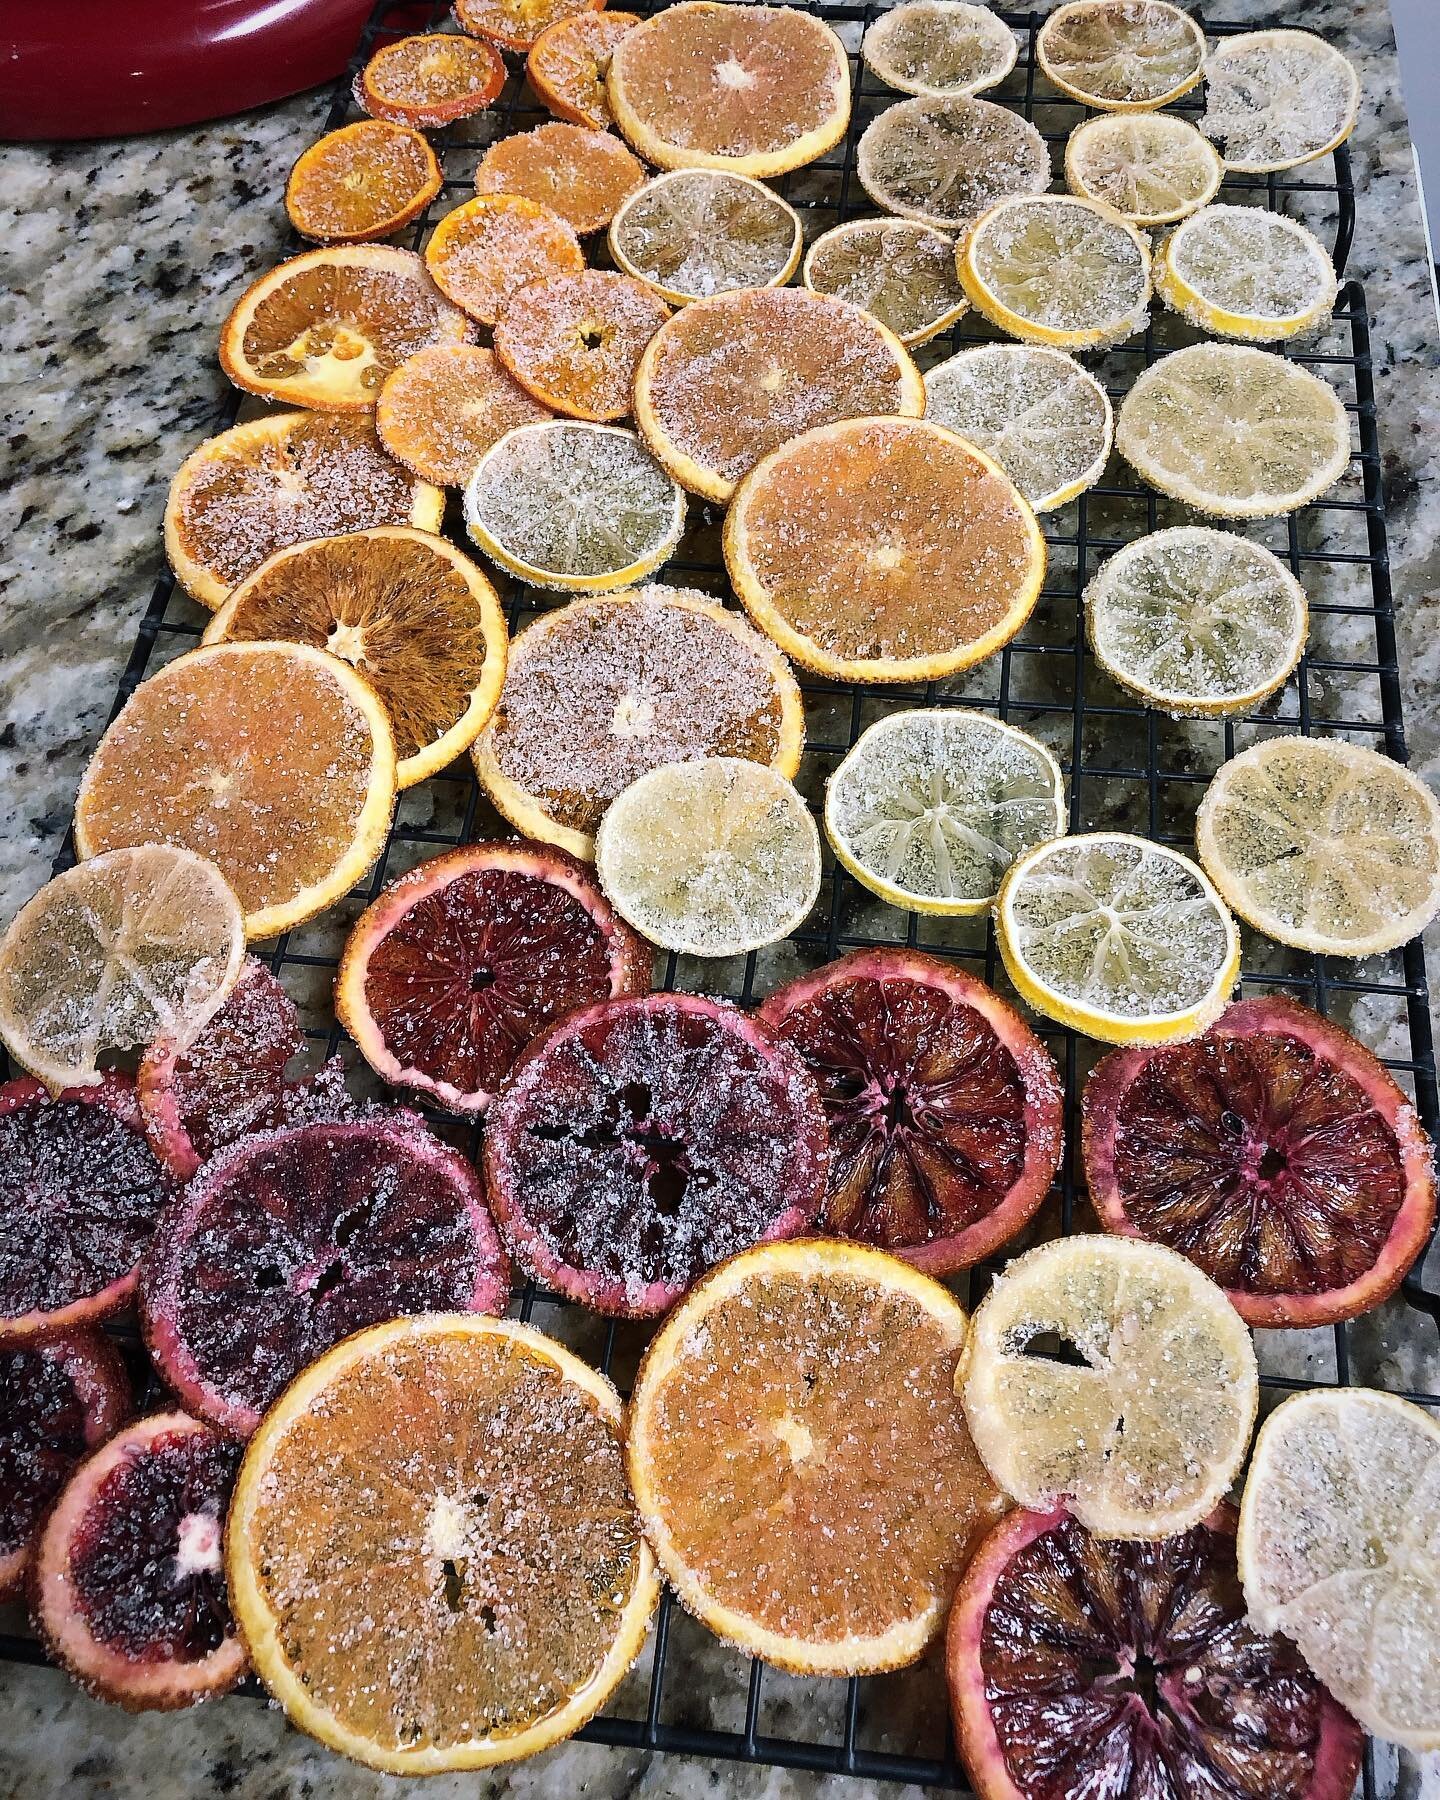 Sugar coated candied citrus slices.

#candy #citrus #bloodorange #lemon #orange